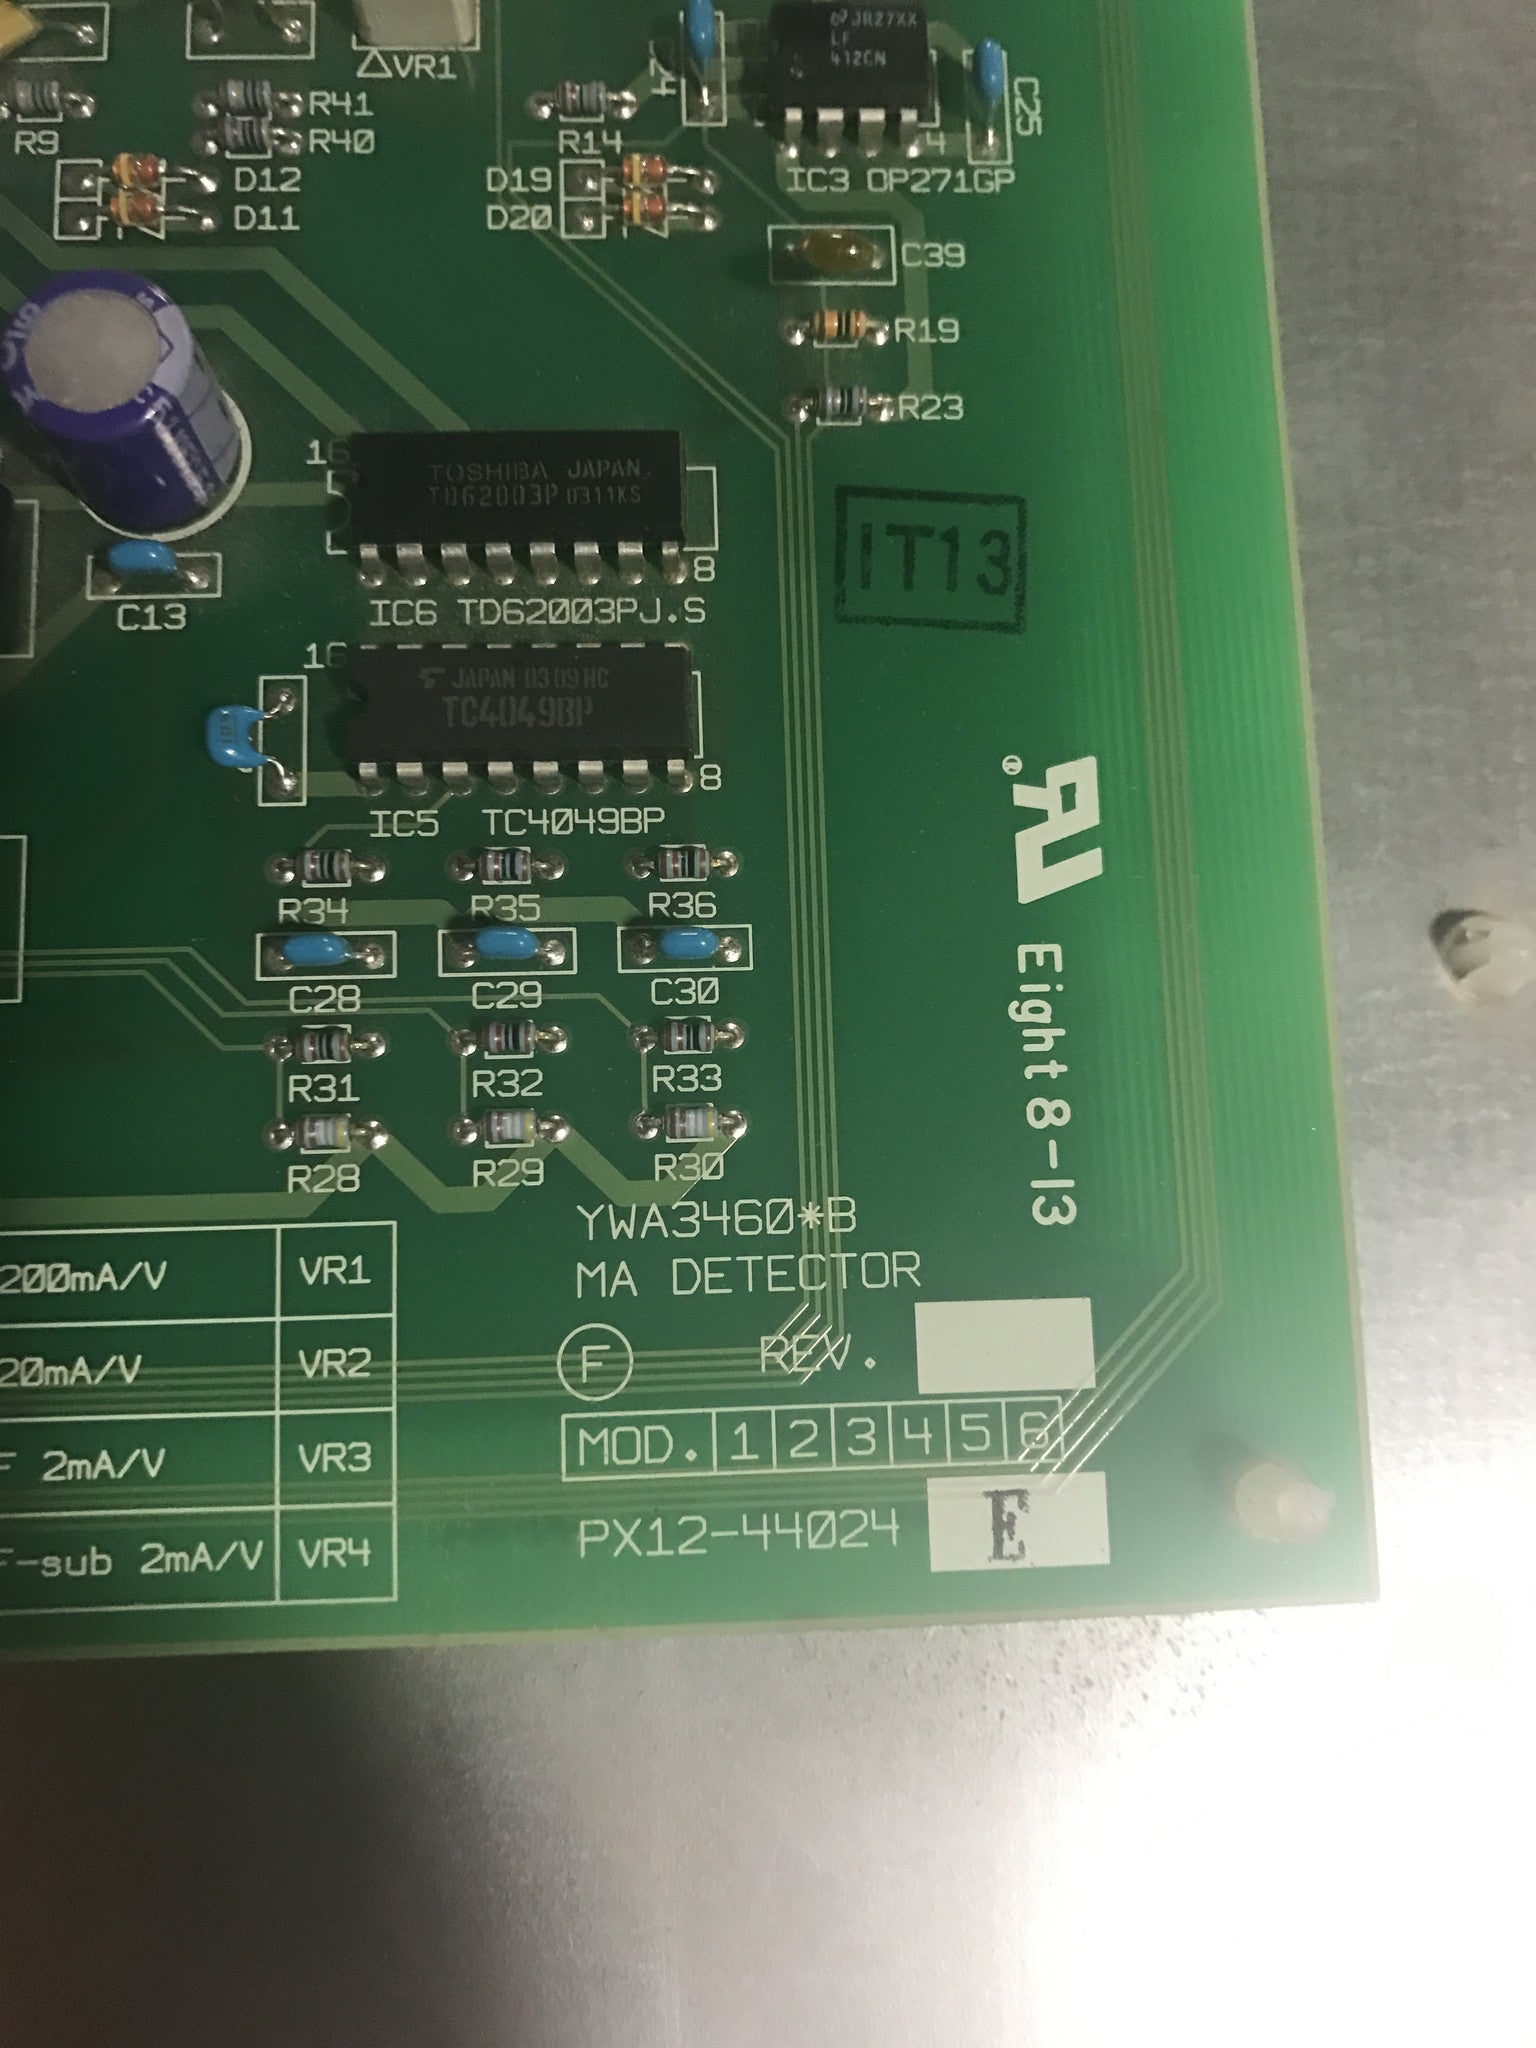 PX12-44024 MA Detector Board for Toshiba Infinix Cath Angio - Anatolia International, Parts - 2